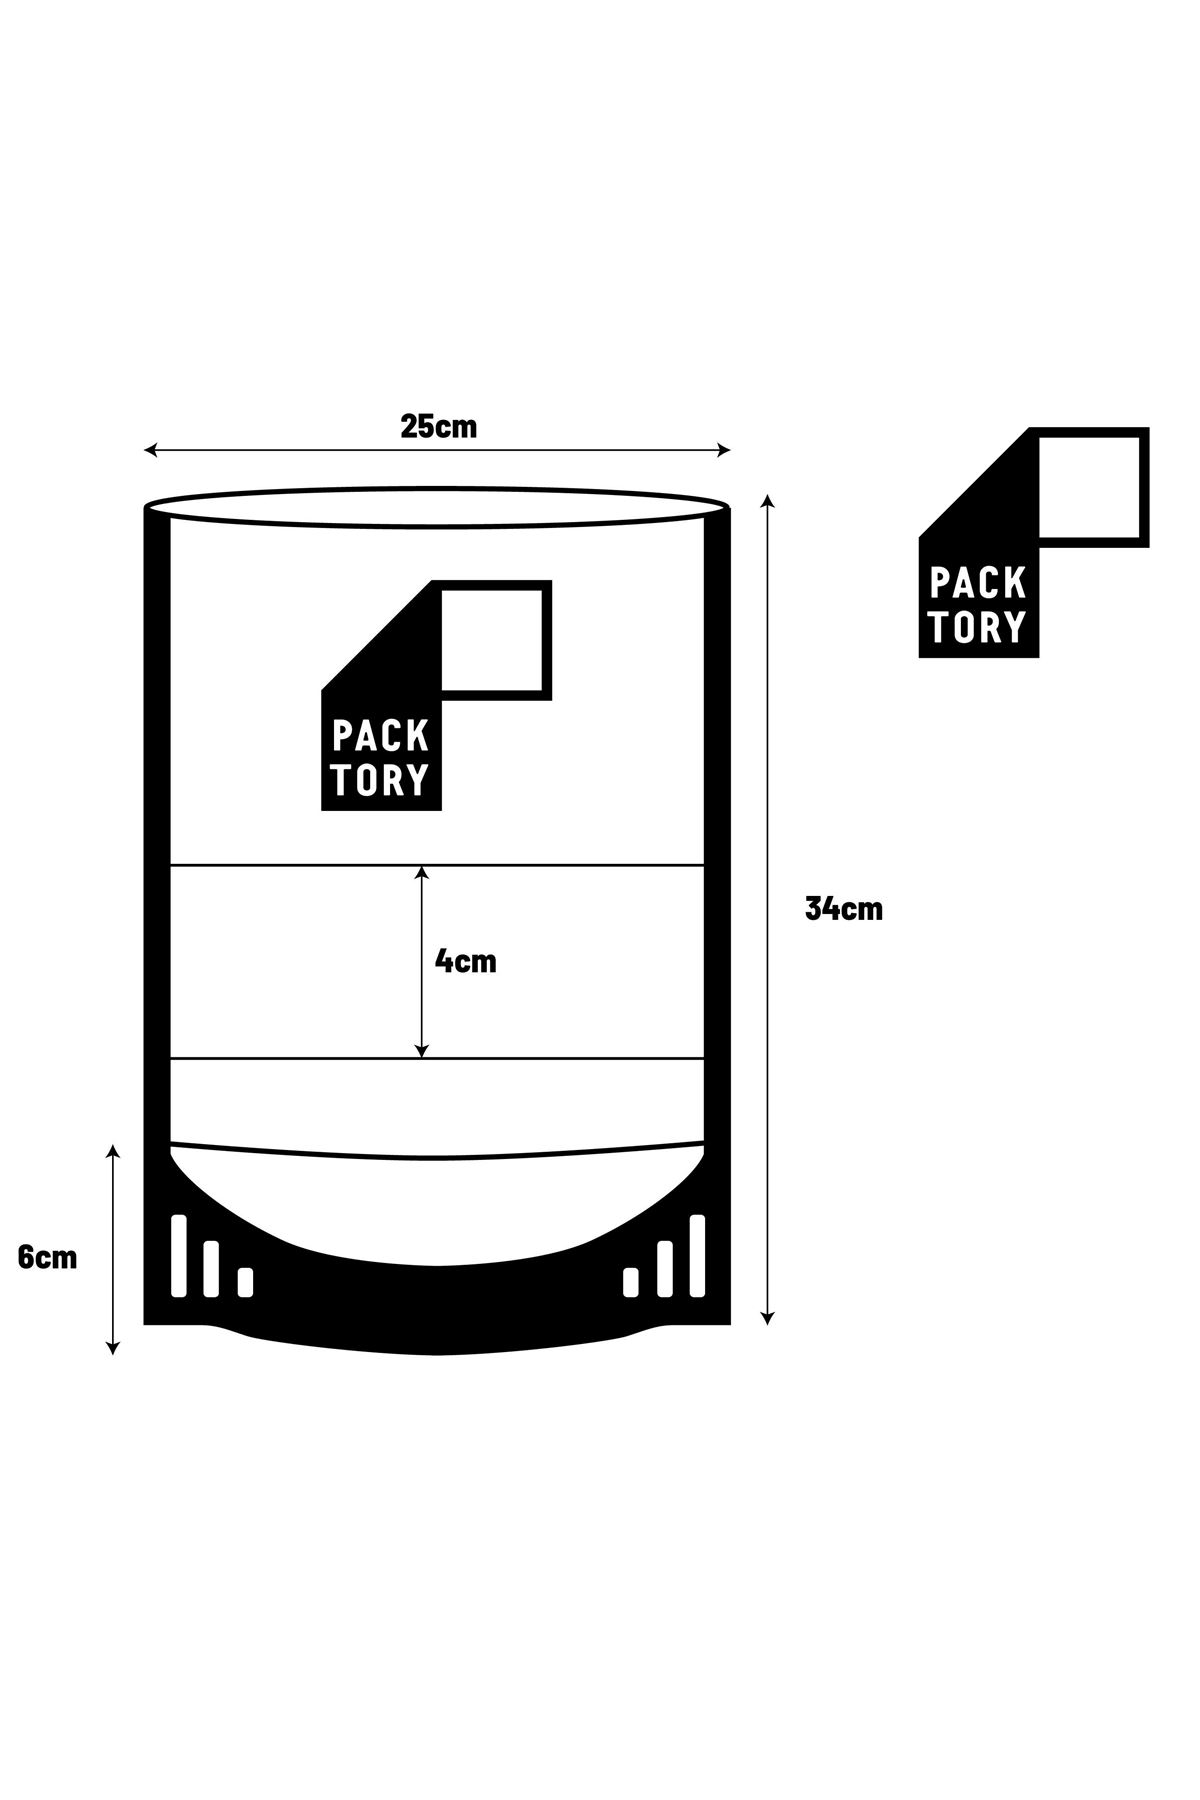 Packtory 25 x 34 + 6 Cm Dar Pencereli Kraft Kilitli Doypack Ambalaj 1500 Gr. 250 Adet